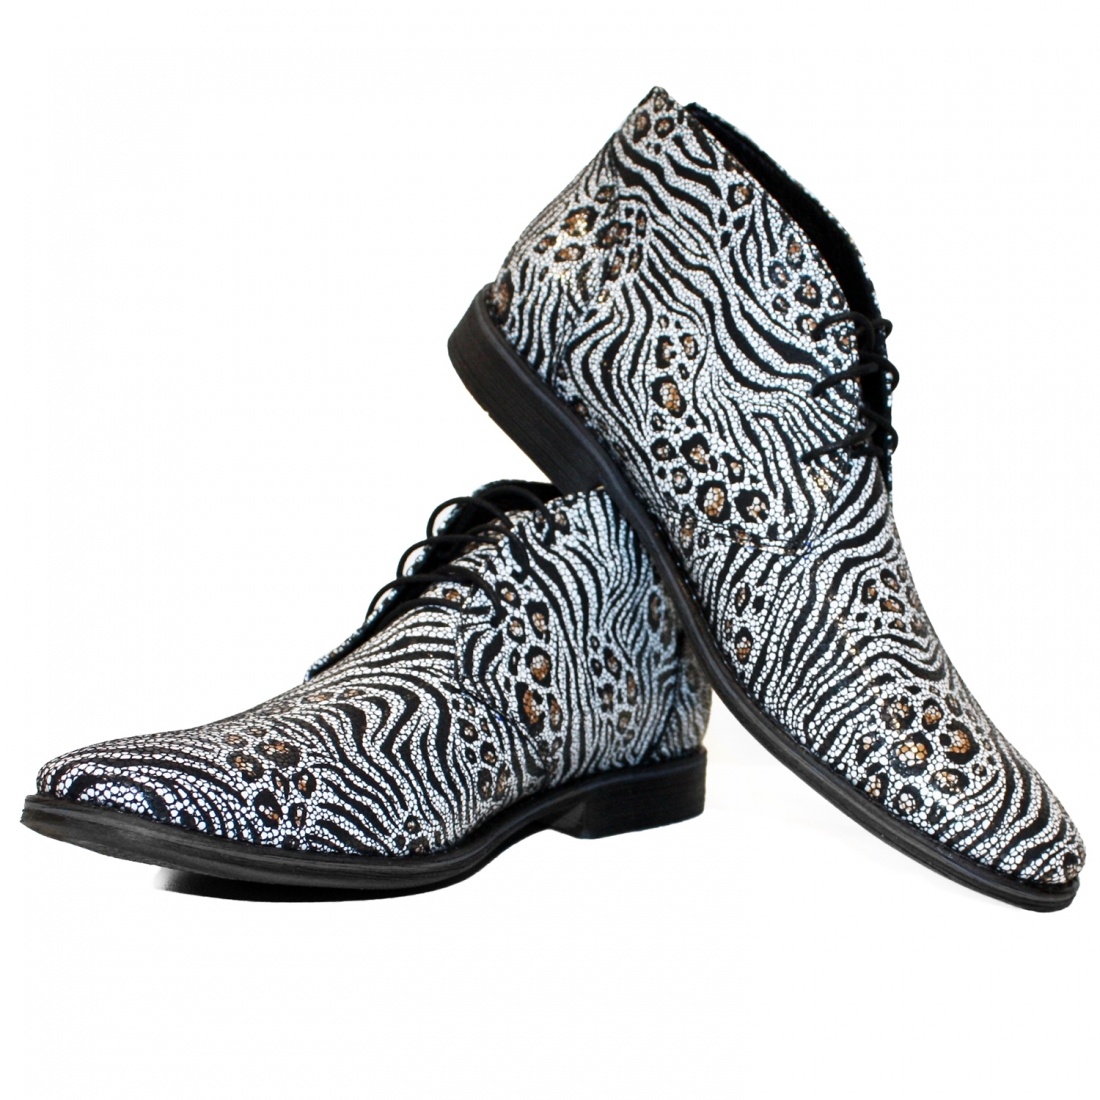 Modello Savanno - Chukka Boots - Handmade Colorful Italian Leather Shoes